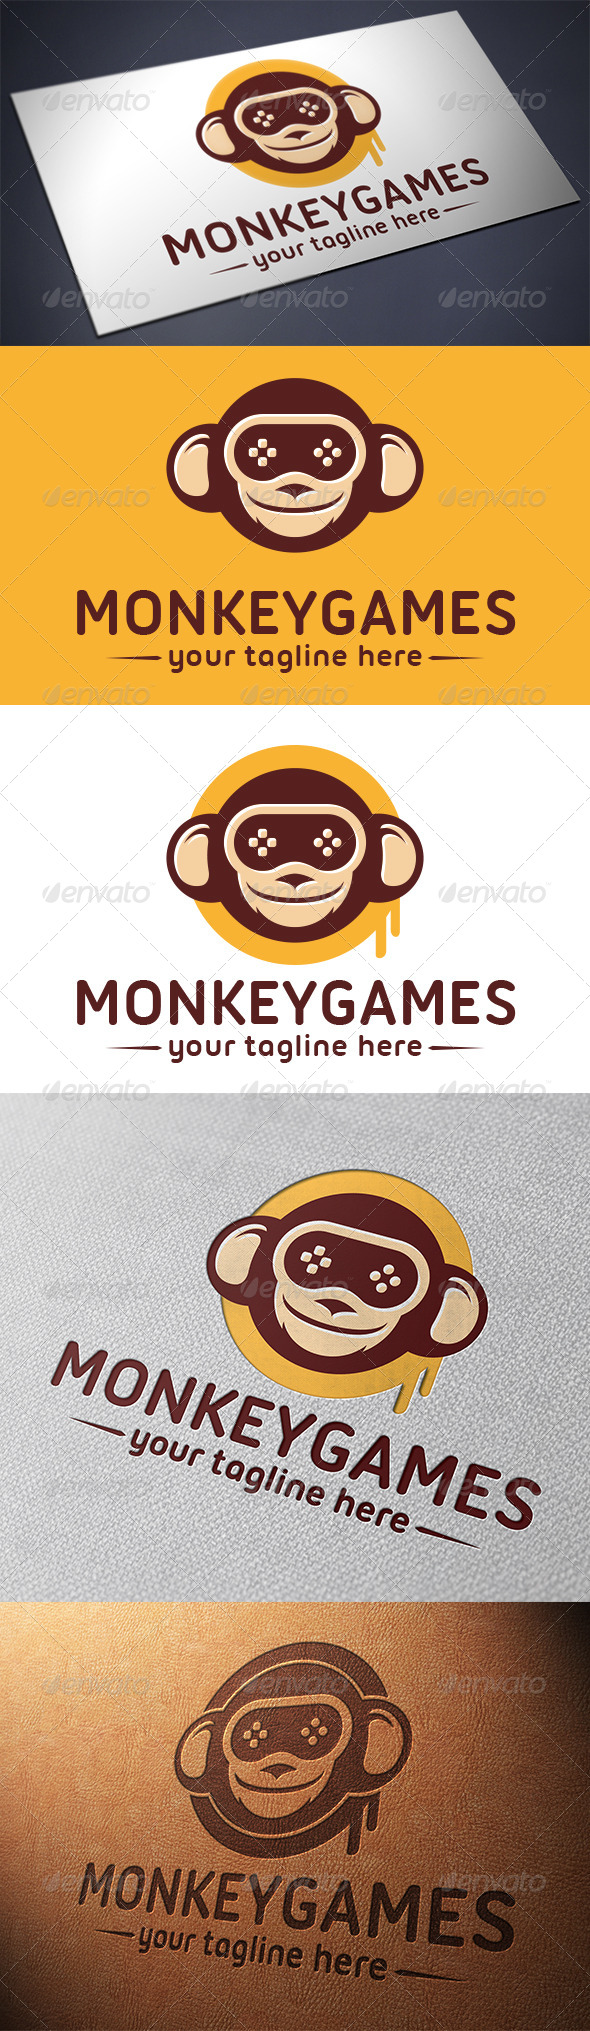 Monkey Game Logo Template